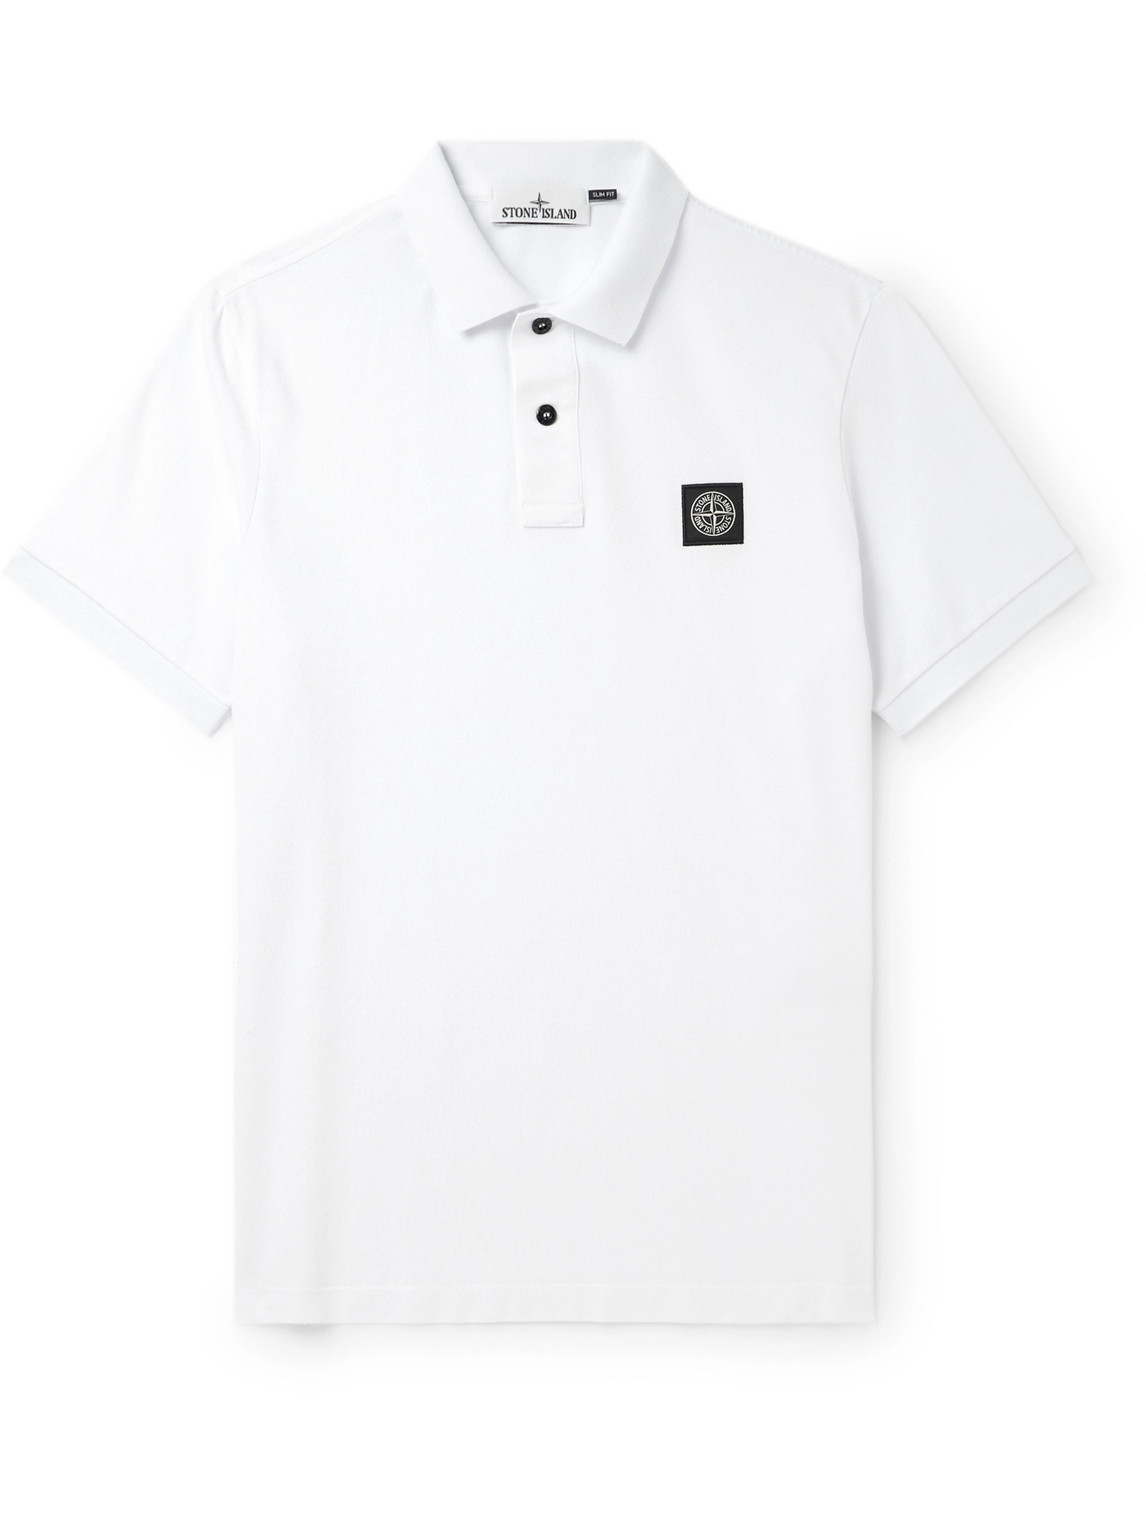 Stone Island - Logo-Appliquéd Cotton-Blend Piqué Polo Shirt - Men - White - S von Stone Island